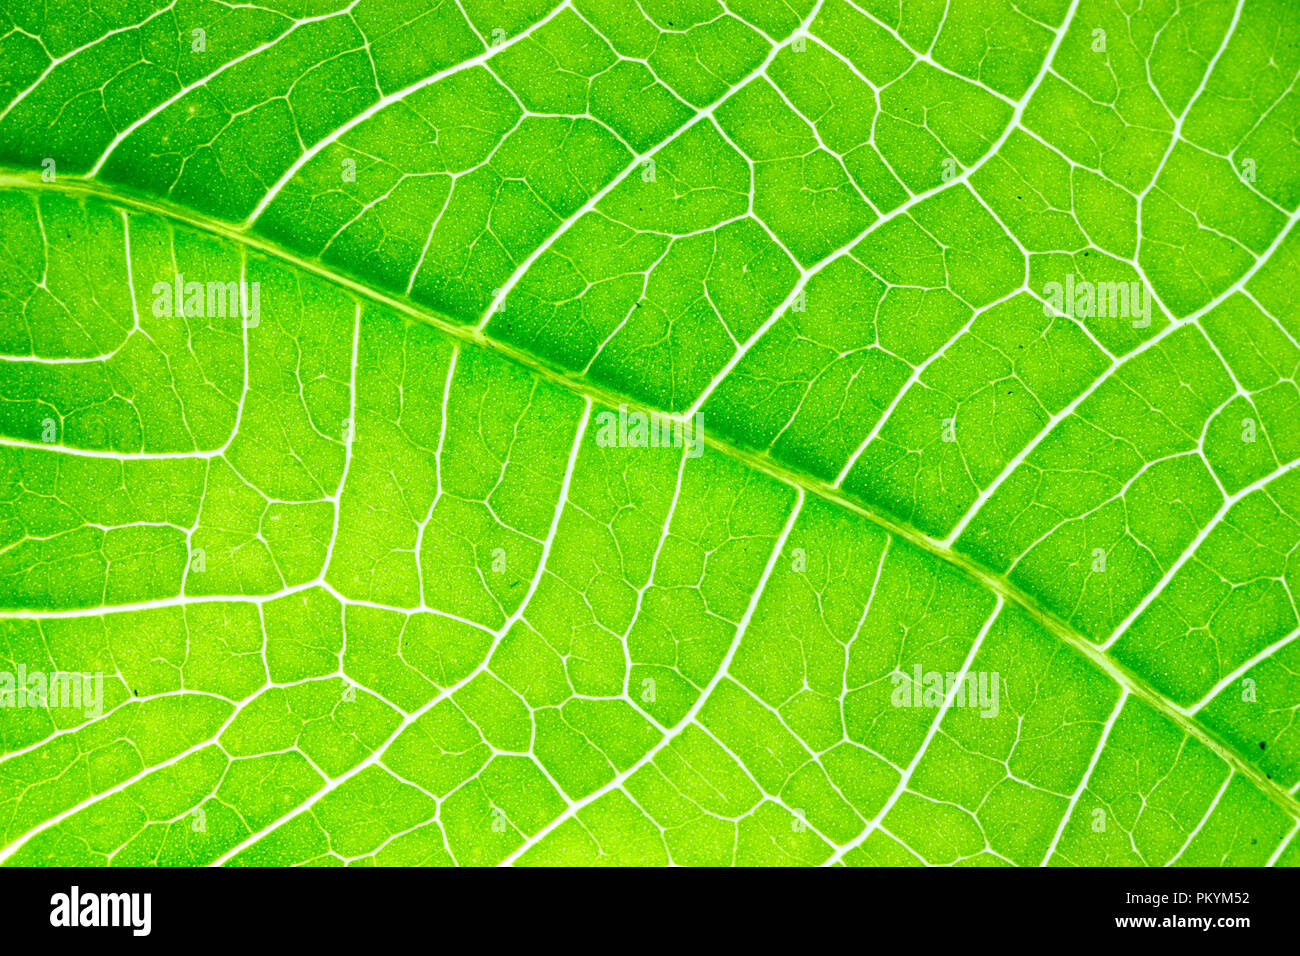 Closeup green leaf background show texture details Stock Photo